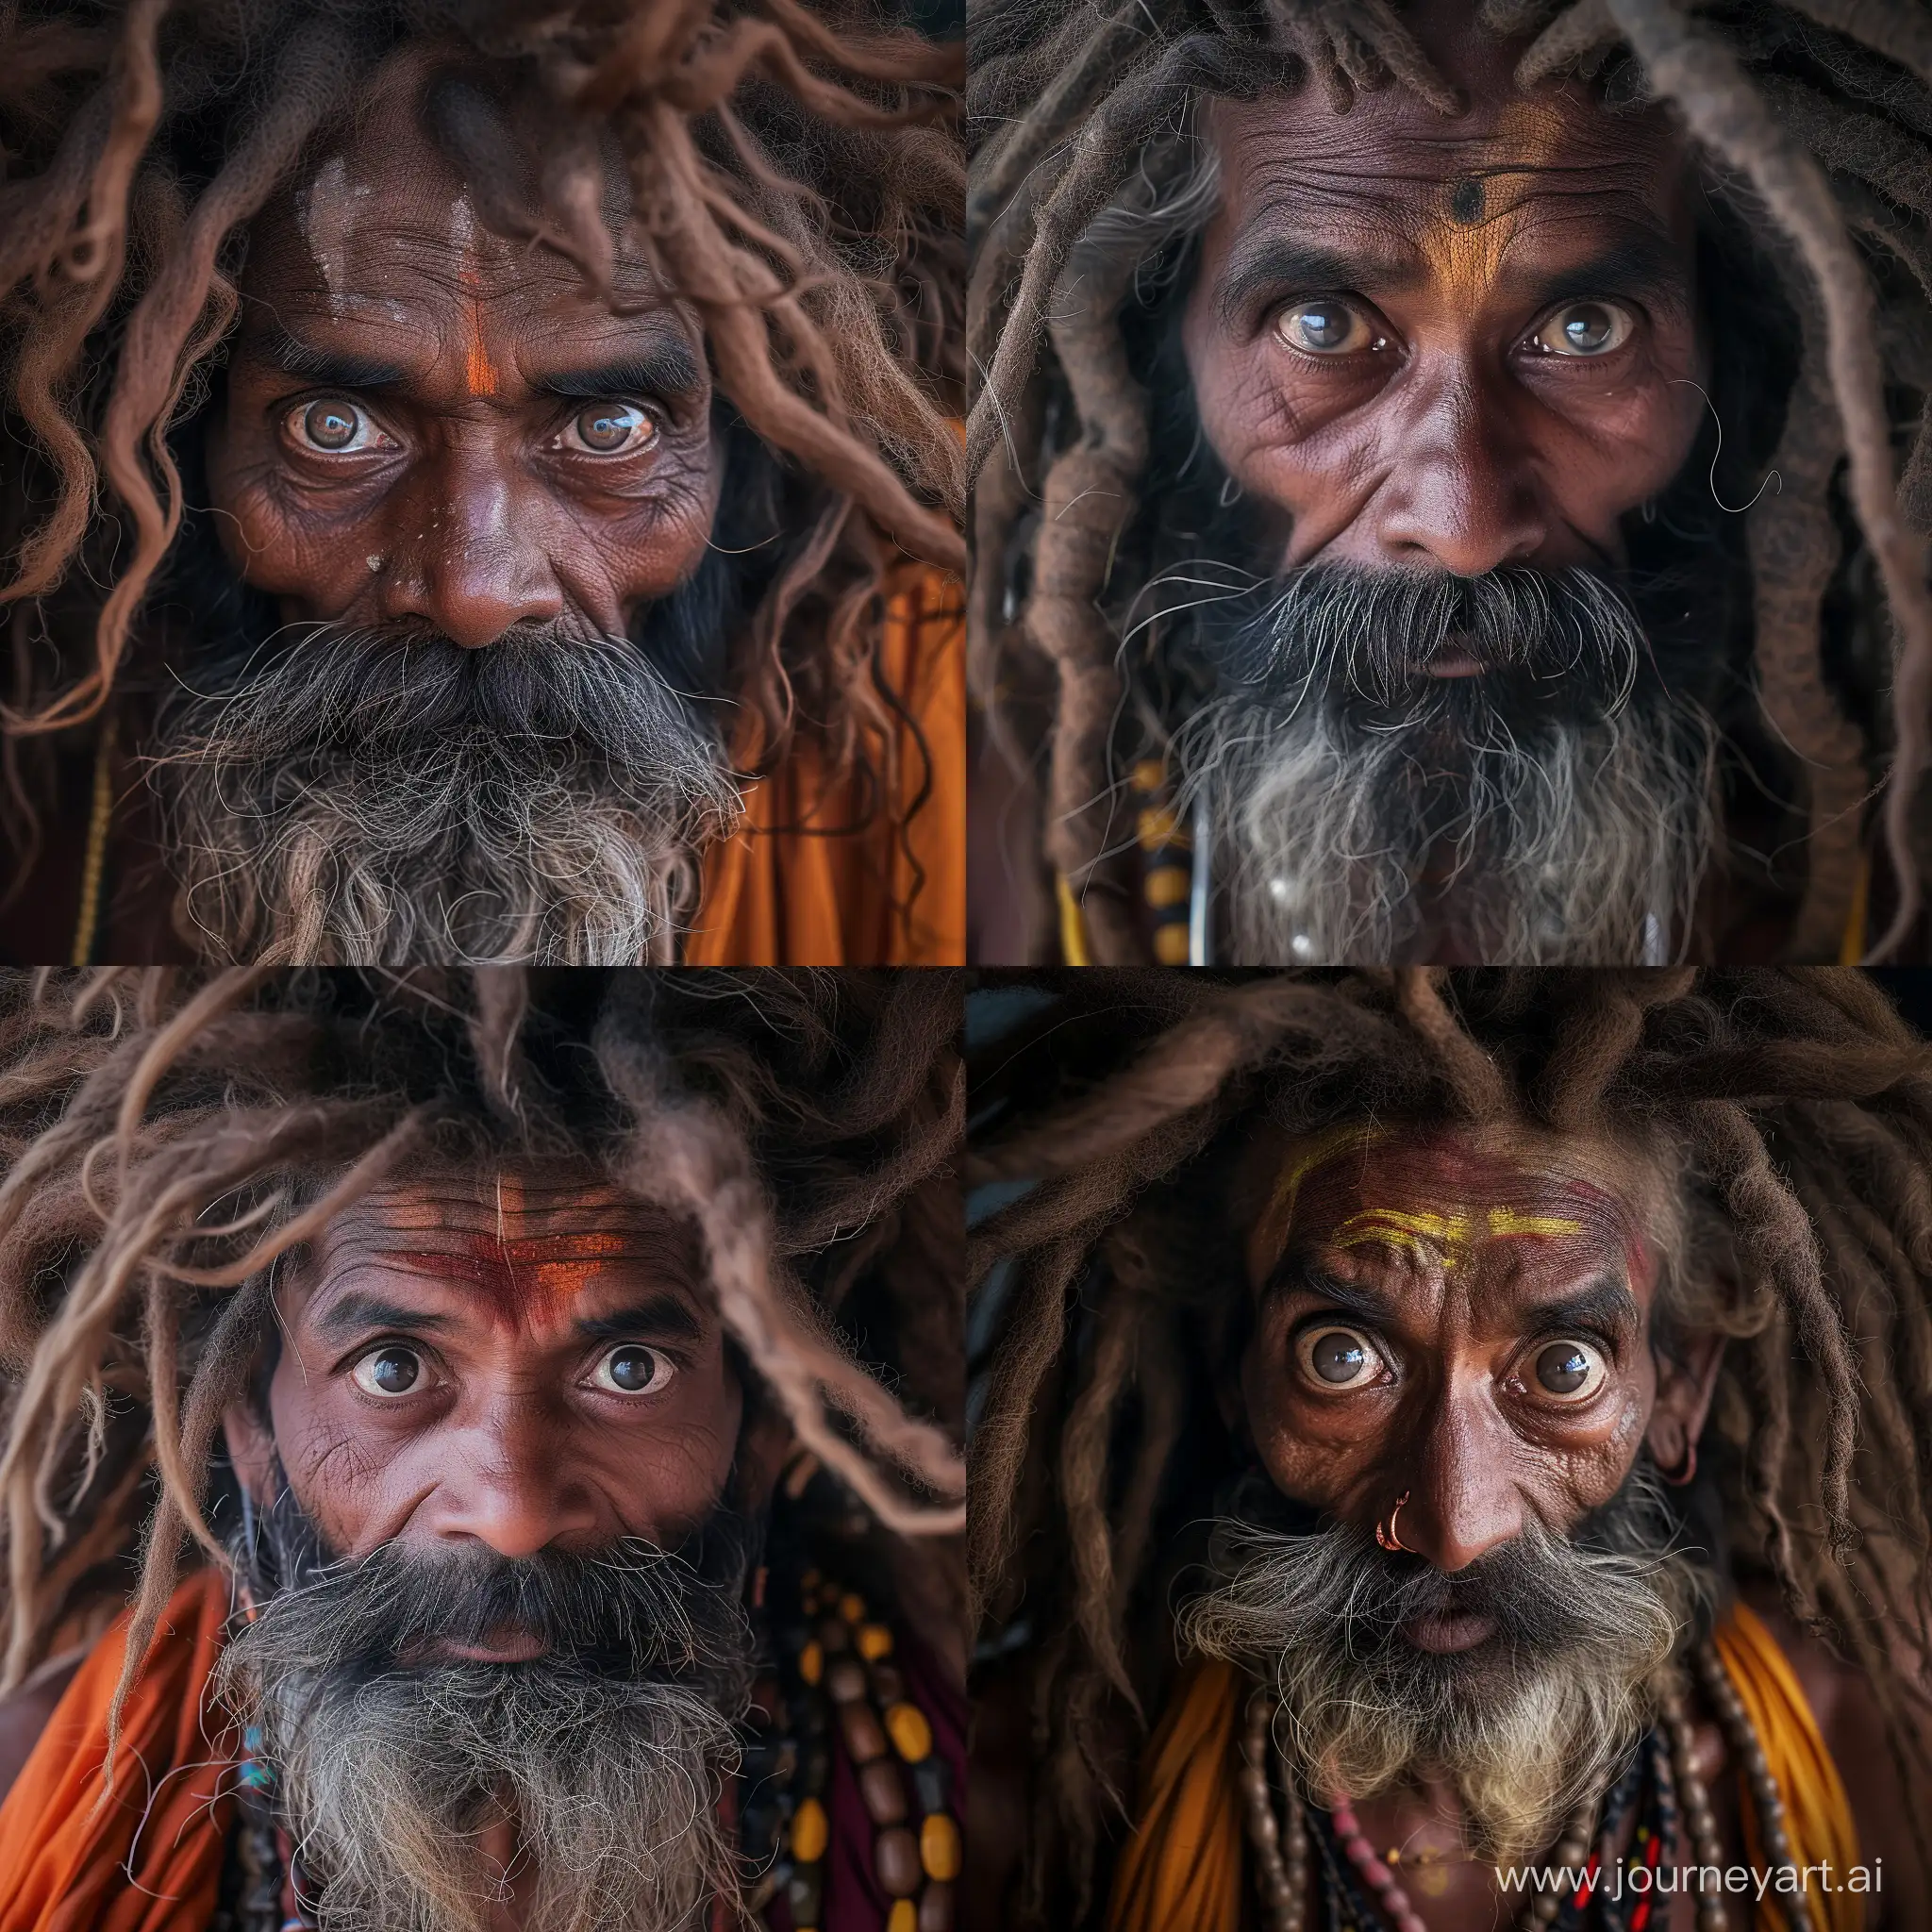 Closeup-Portrait-of-Naga-Sadhu-in-India-with-Striking-Eyes-and-Wild-Hair-Fuji-XT5-Photorealistic-Image